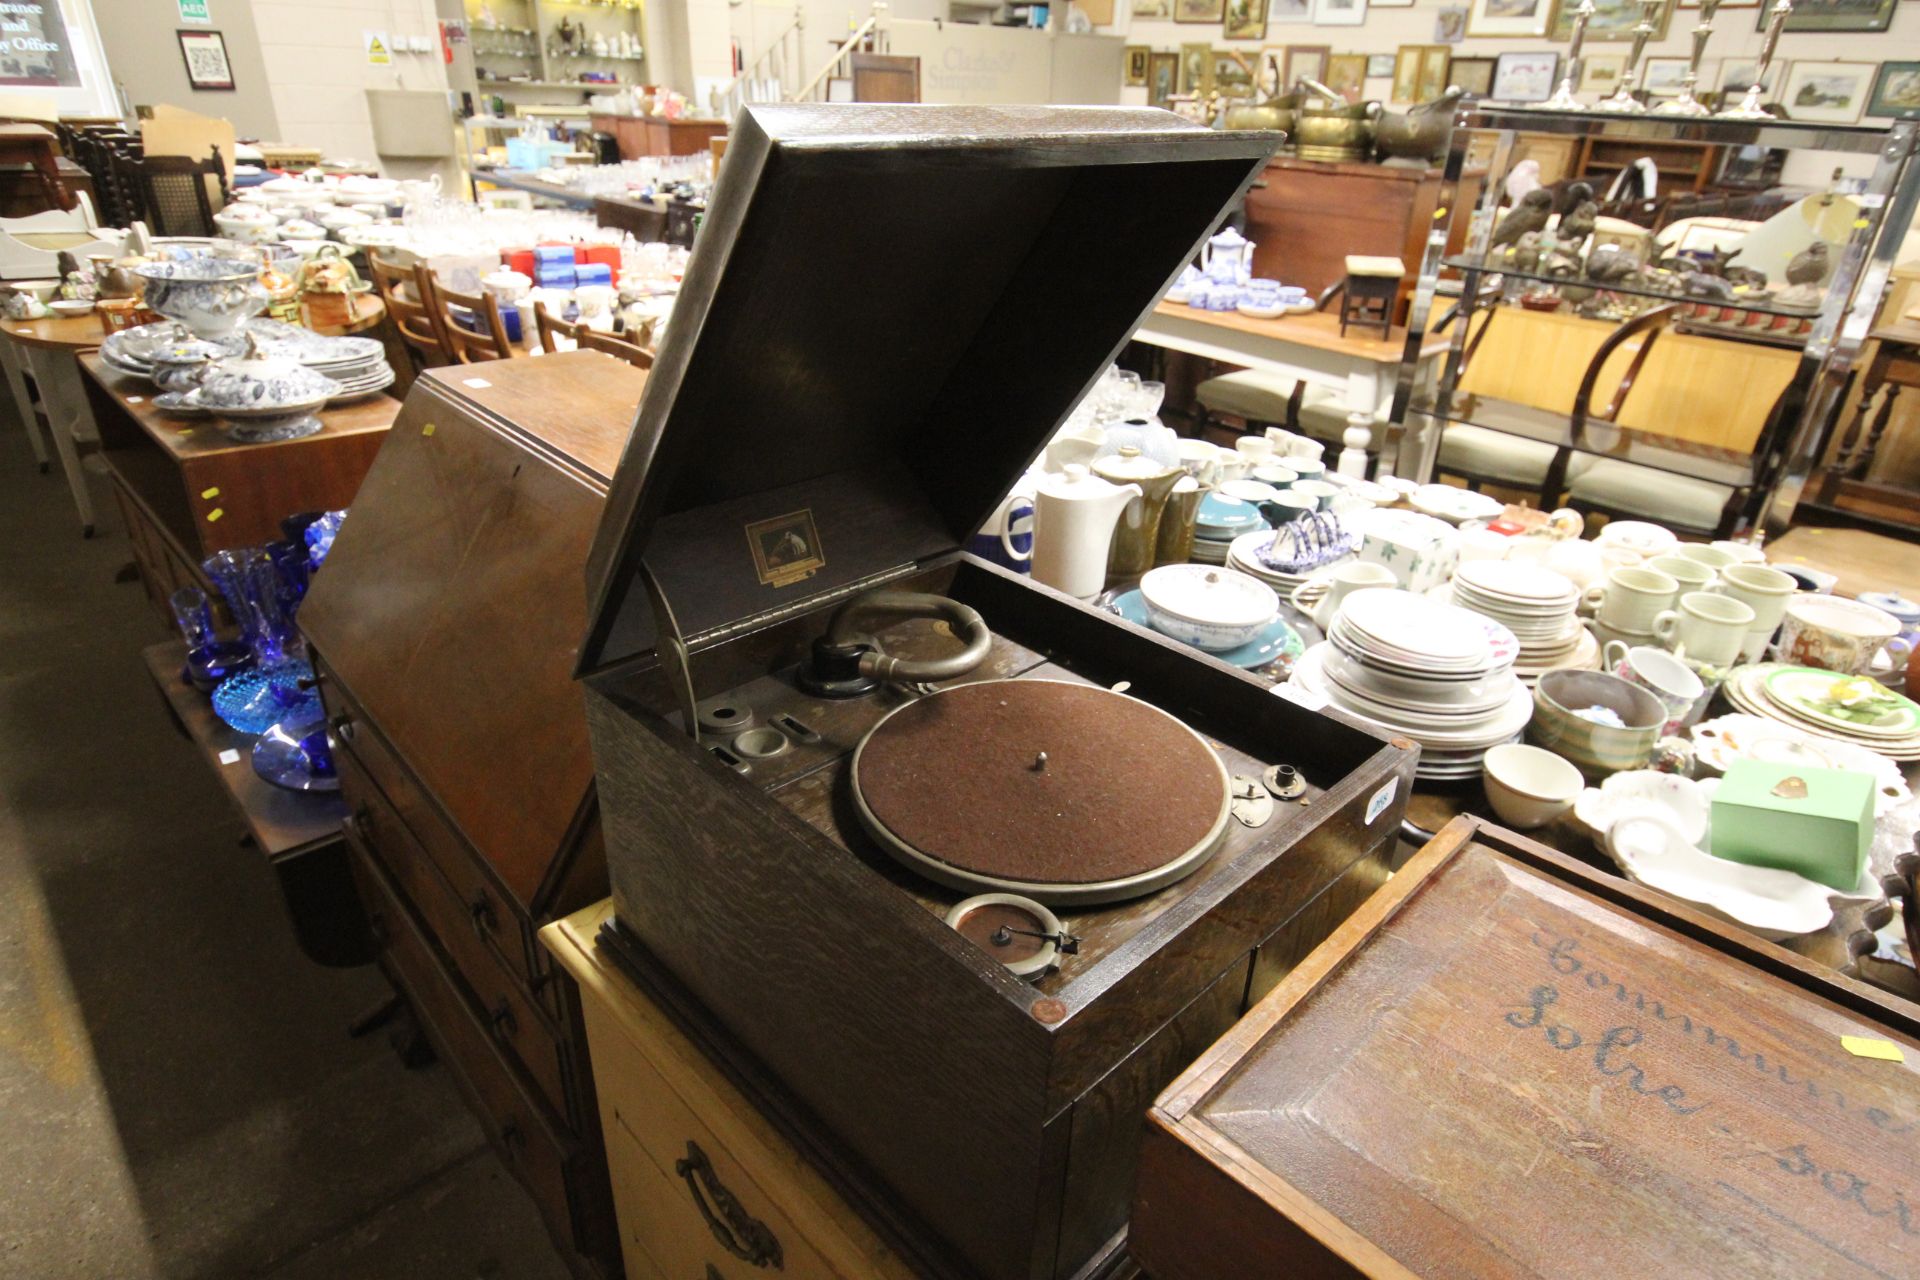 An HMV model 109 wind up gramophone